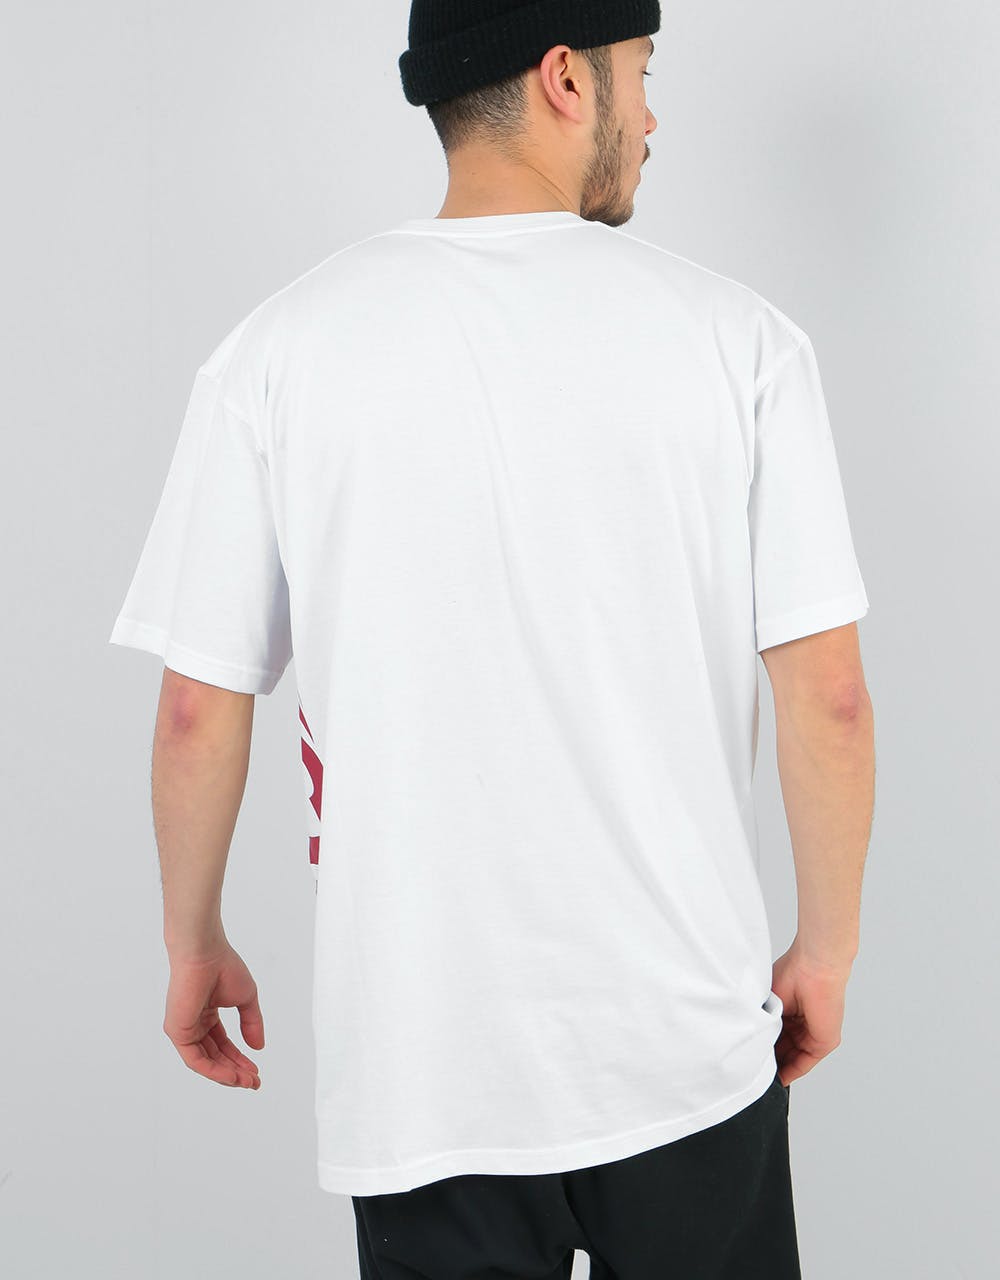 Vans Distorted T-Shirt - White